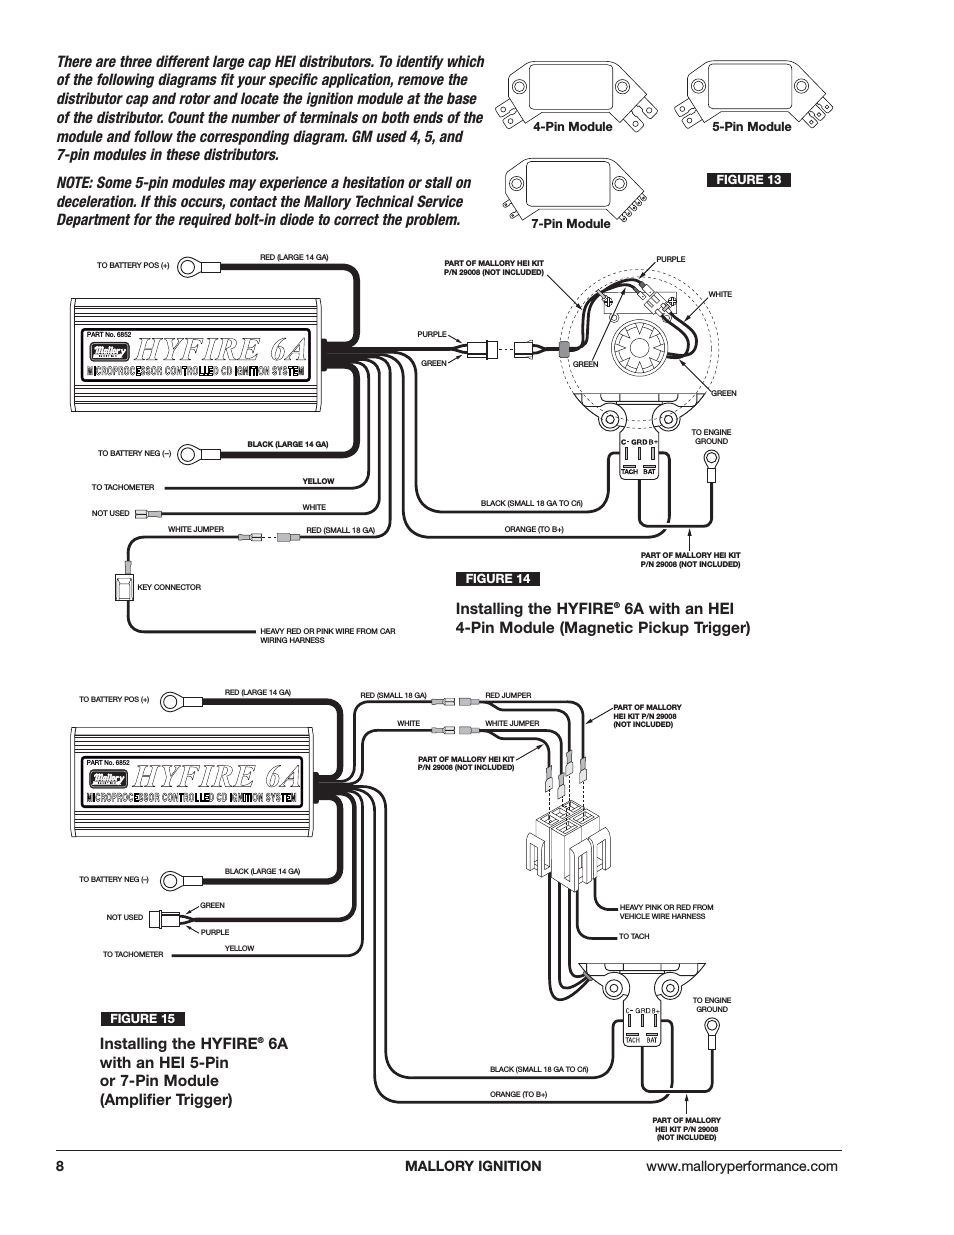 Mallory Ignition Wiring Diagram 75 | Manual E-Books - Mallory Ignition Wiring Diagram